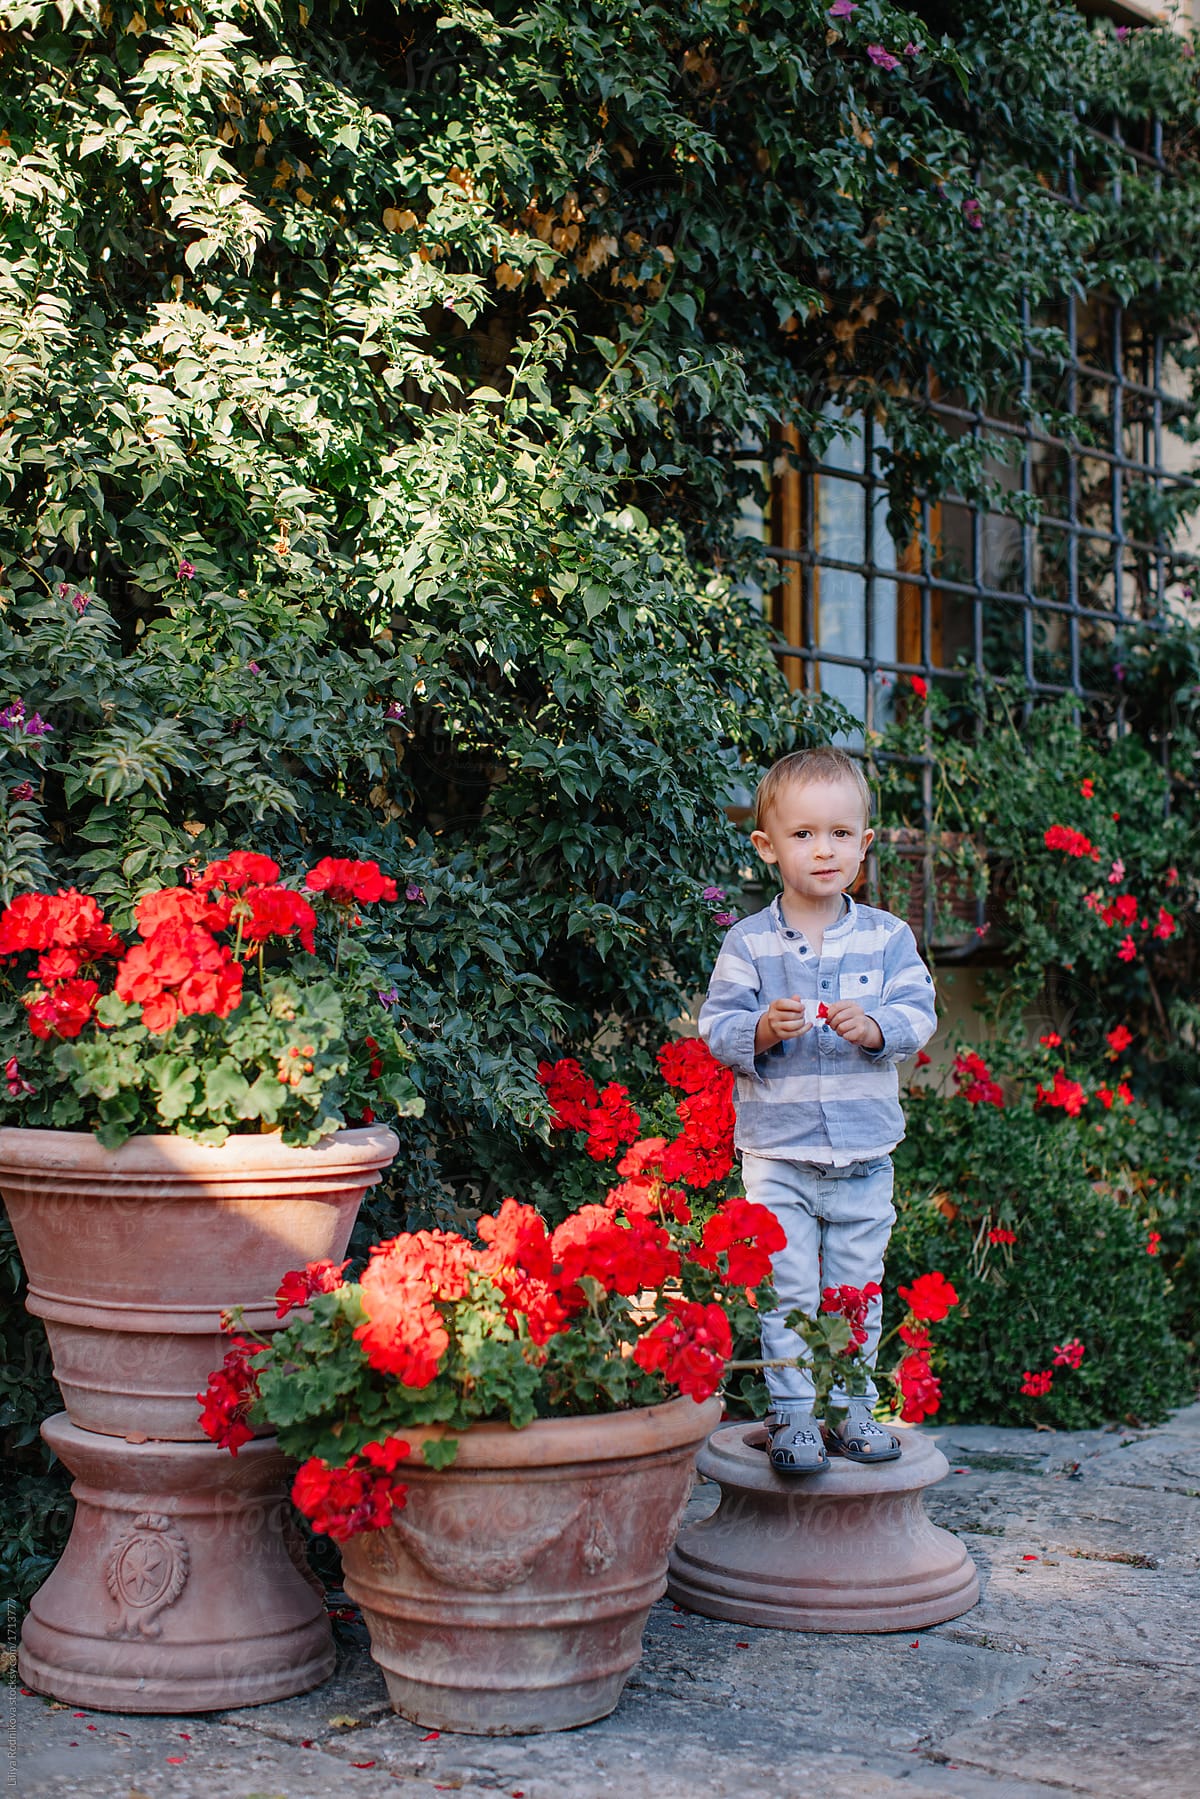 Little boy posing among the flowers pots